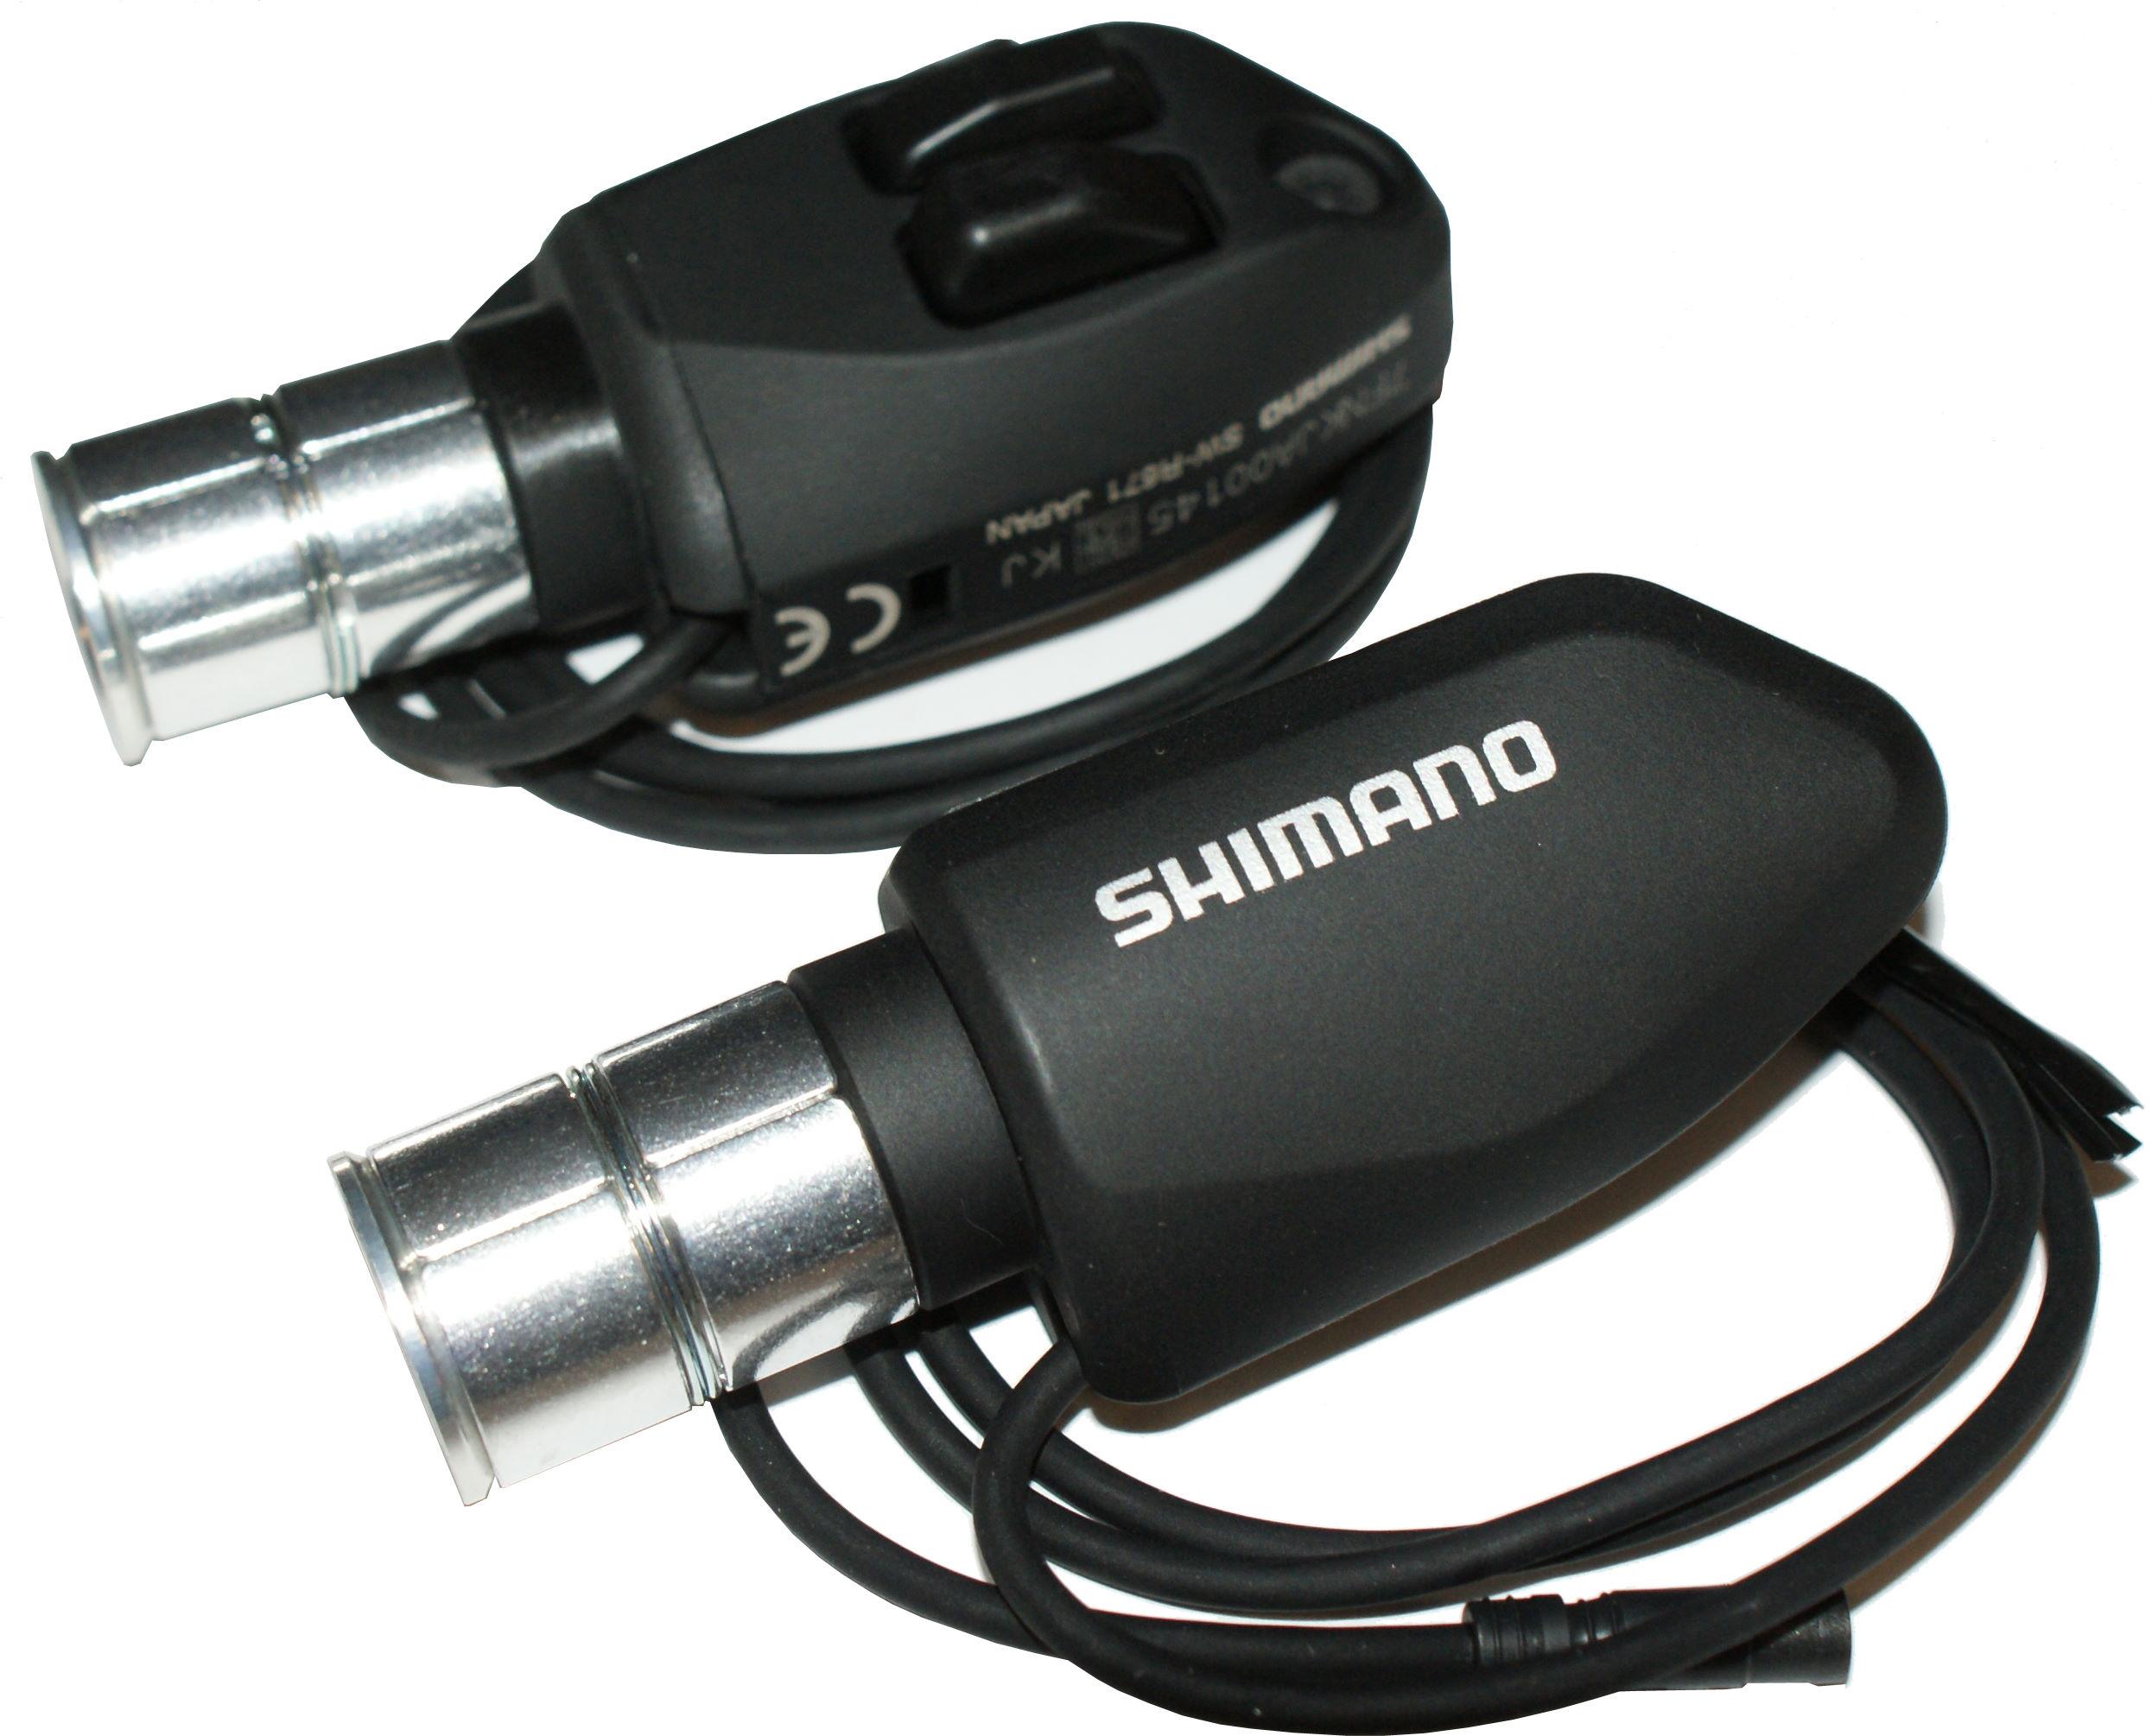 Shimano Di2 11 Speed Time Trial Gear Shifters - Black